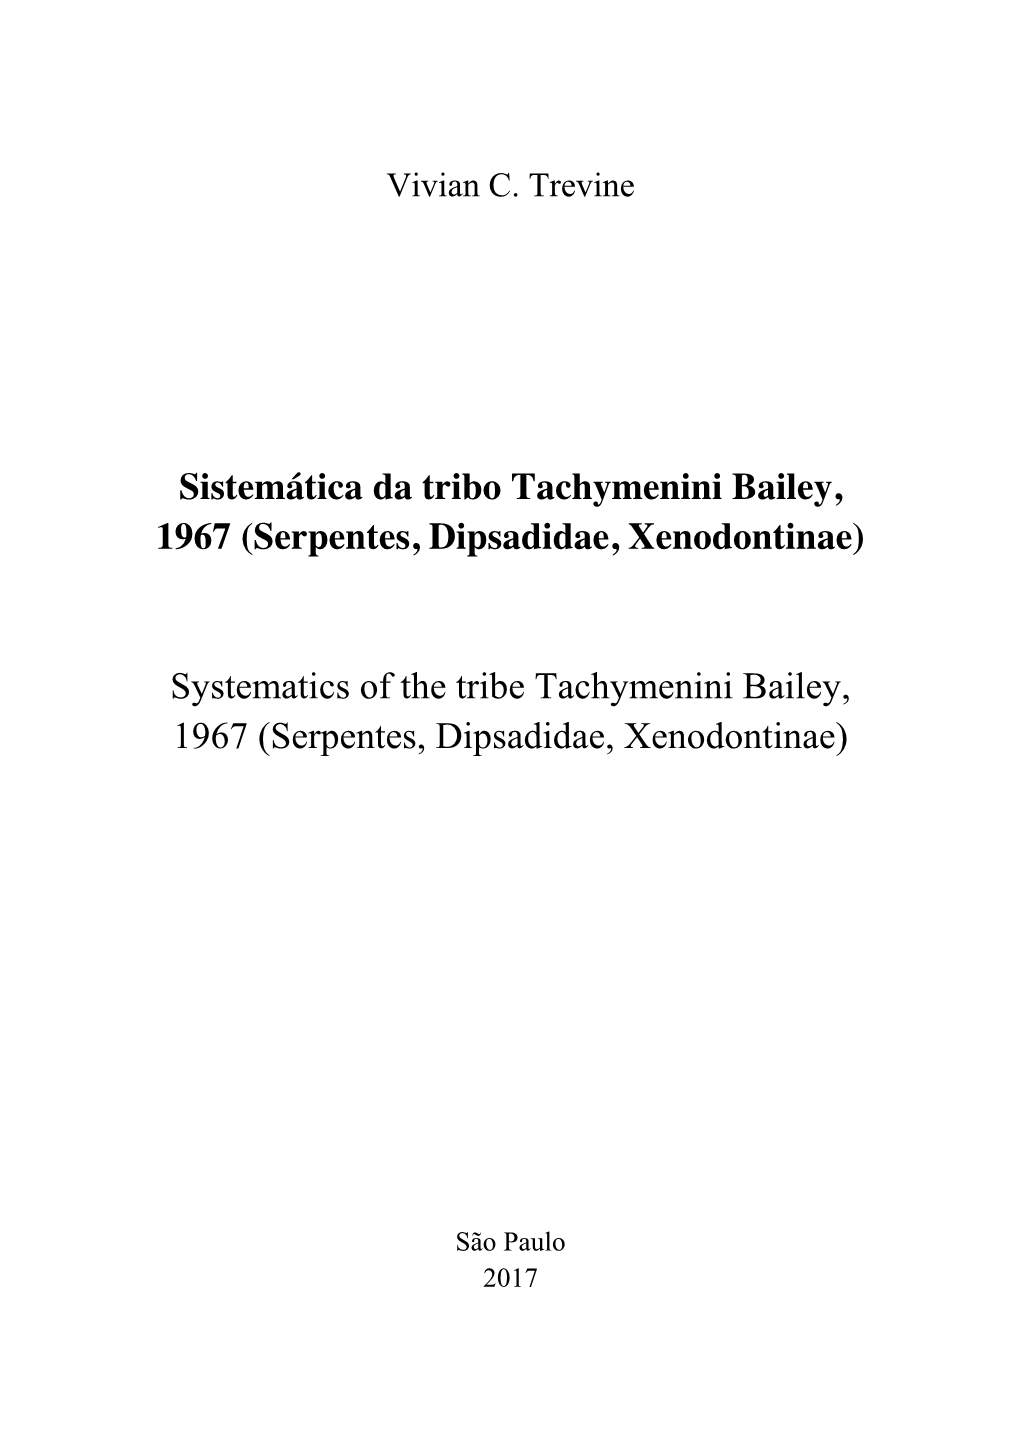 Sistemática Da Tribo Tachymenini Bailey, 1967 (Serpentes, Dipsadidae, Xenodontinae)